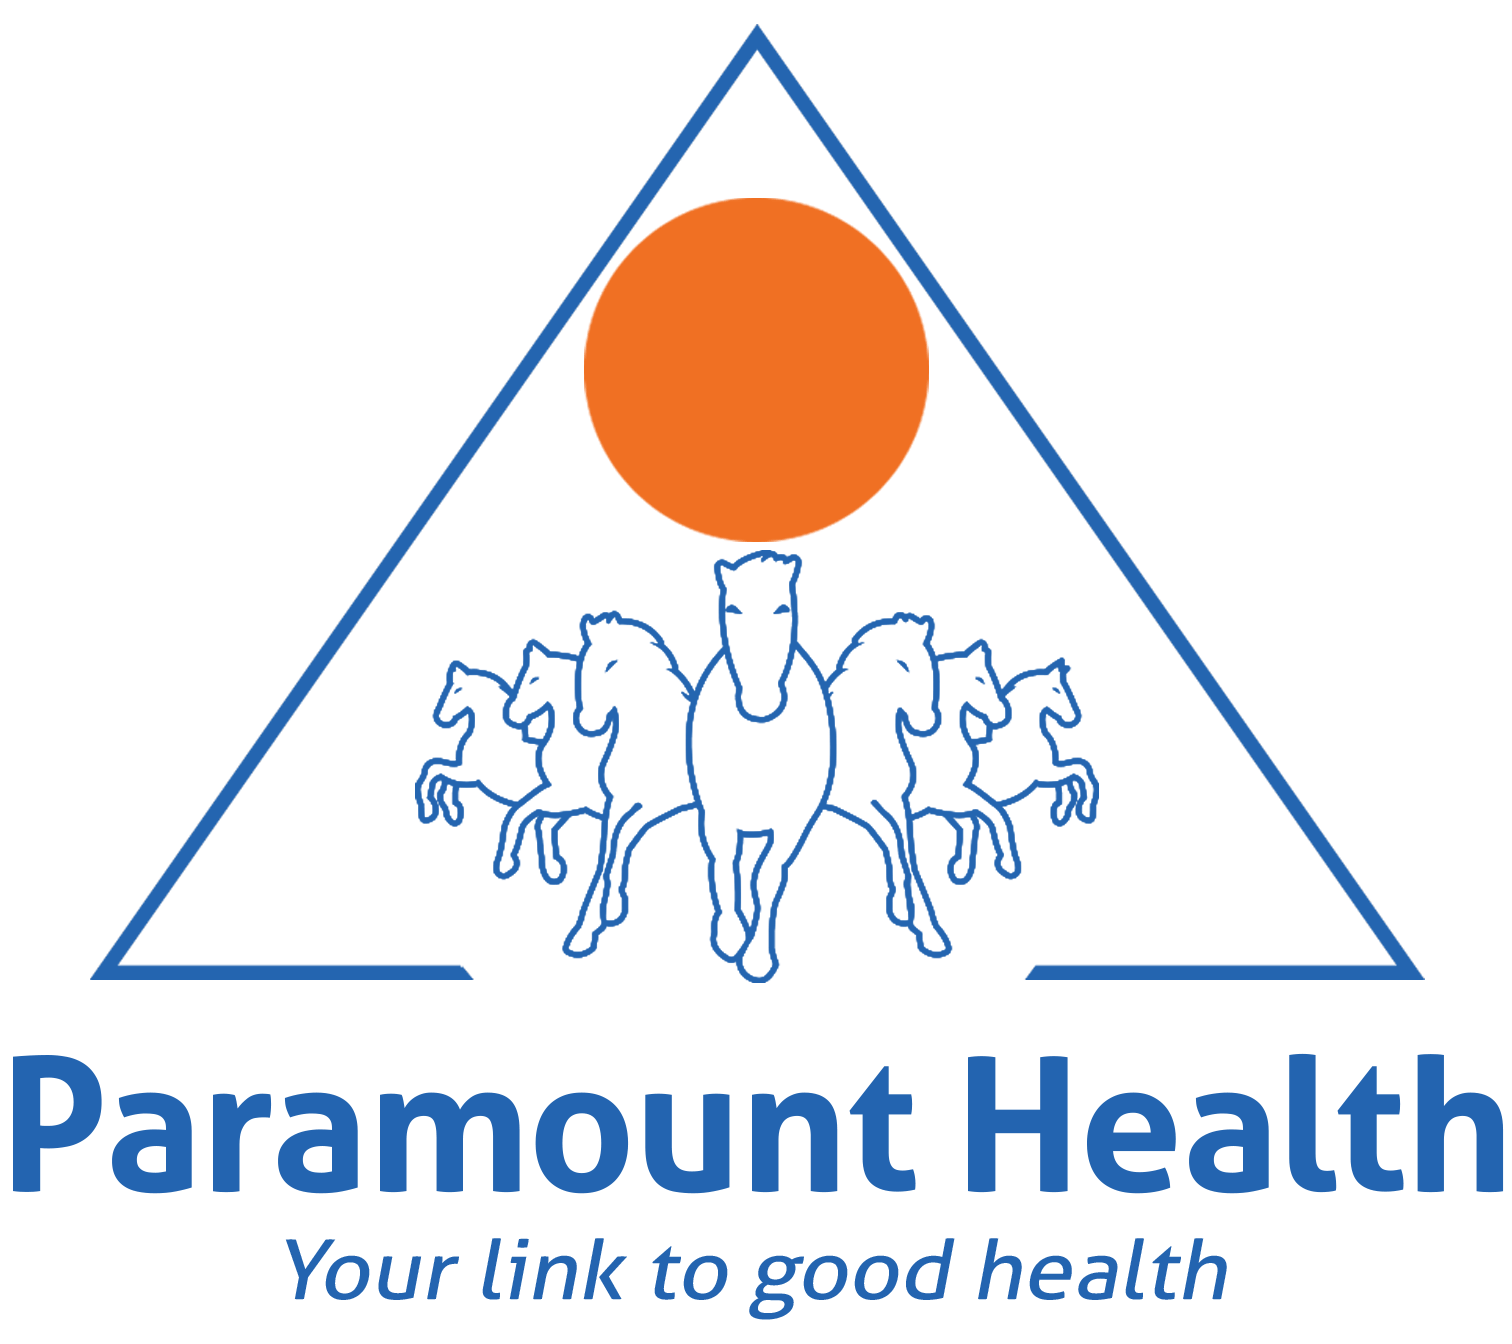 Paramount Health Services & Insurance TPA Pvt. Ltd.